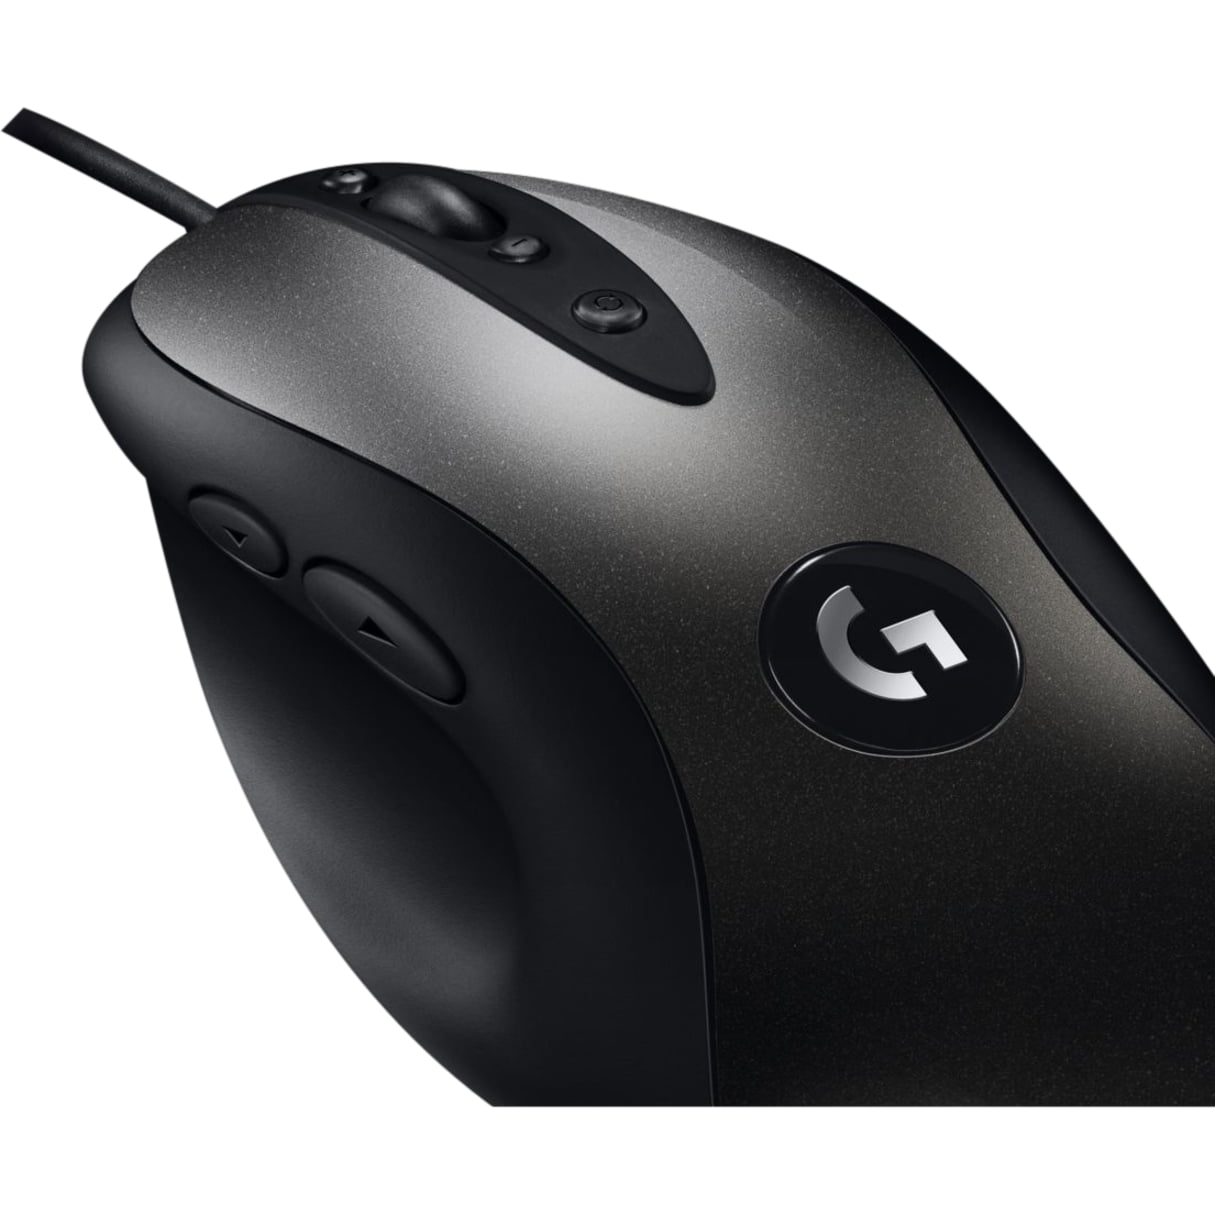 smidig Pludselig nedstigning Portico Logitech MX518 Gaming Mouse - Walmart.com